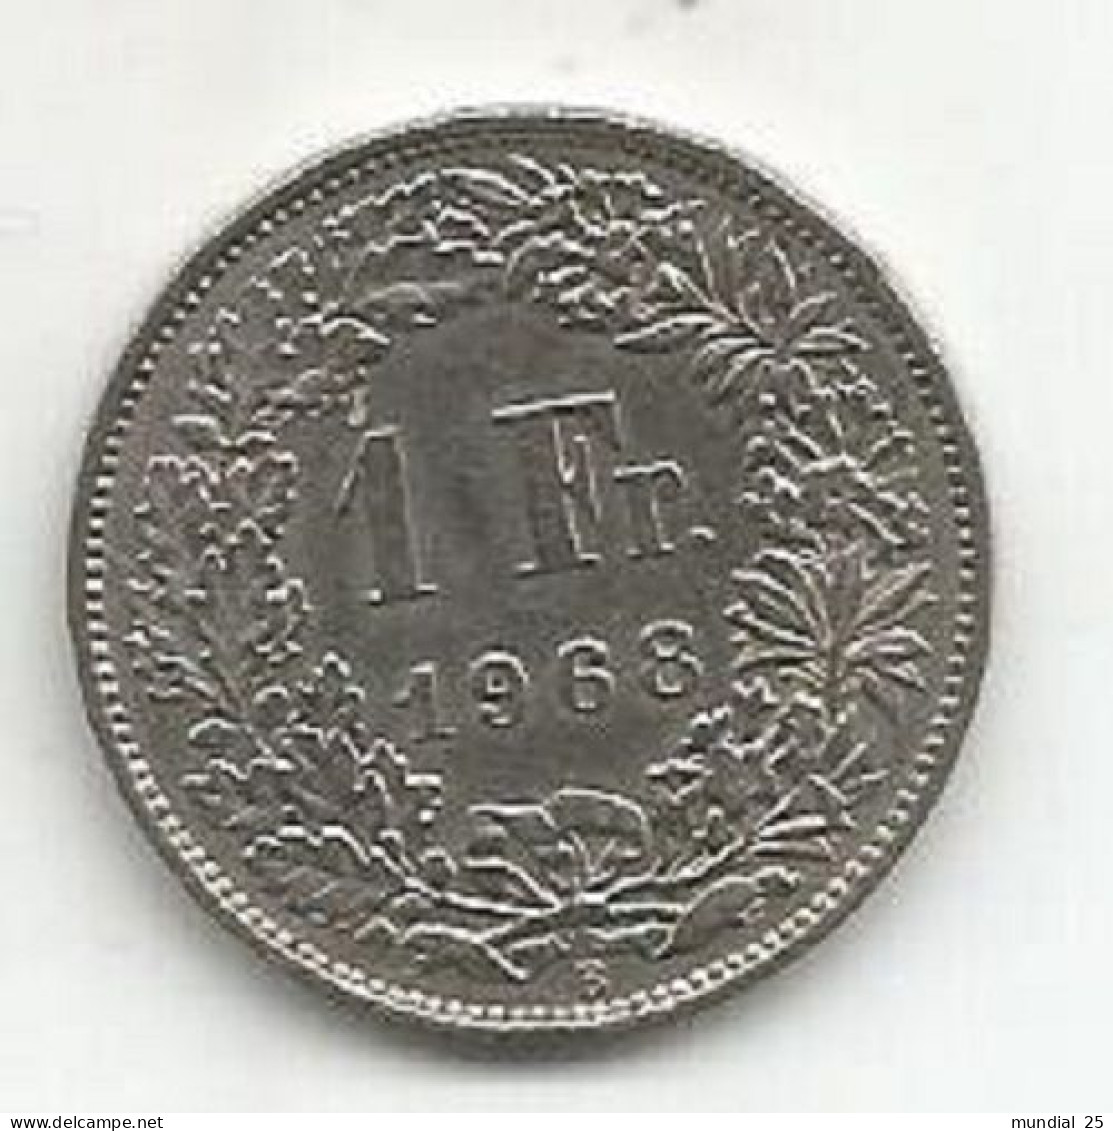 SWITZERLAND 1 FRANC 1968 B - 1 Franc